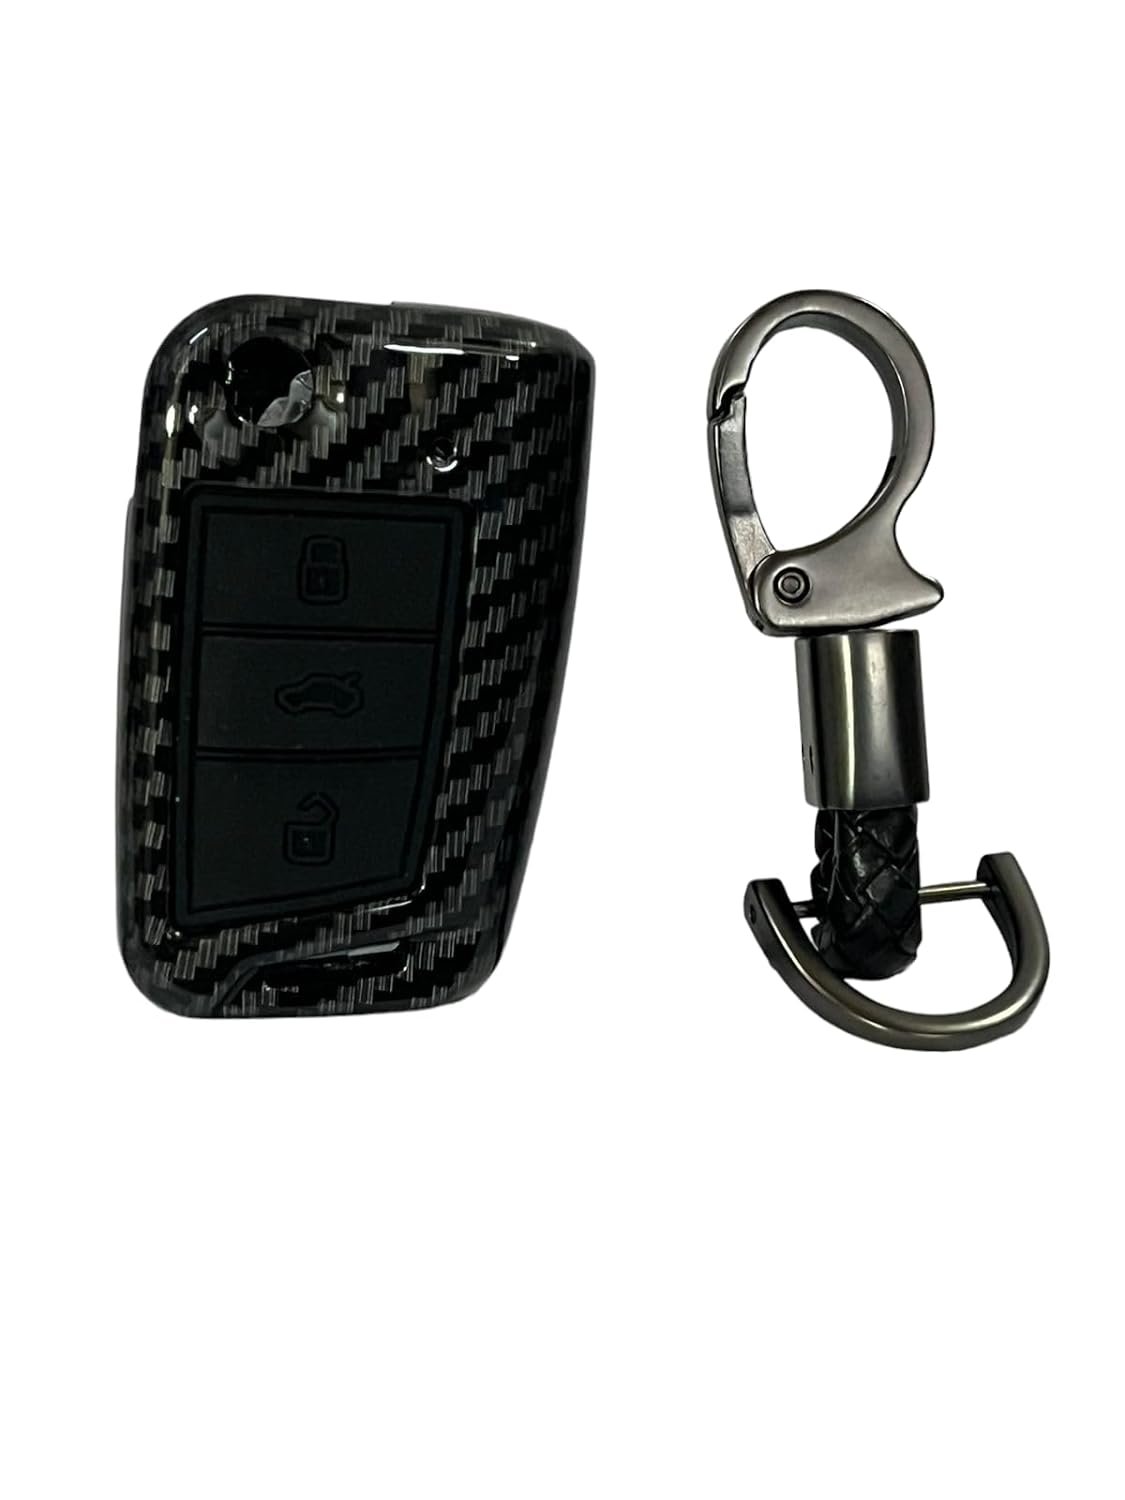 Carbon Fiber ABS Car Key Cover Compatible with Skoda,Kushaq,Taigun,Tiguan Virtus,Octavia,Kodiaq Folding Key (Key Chain Included) Image 